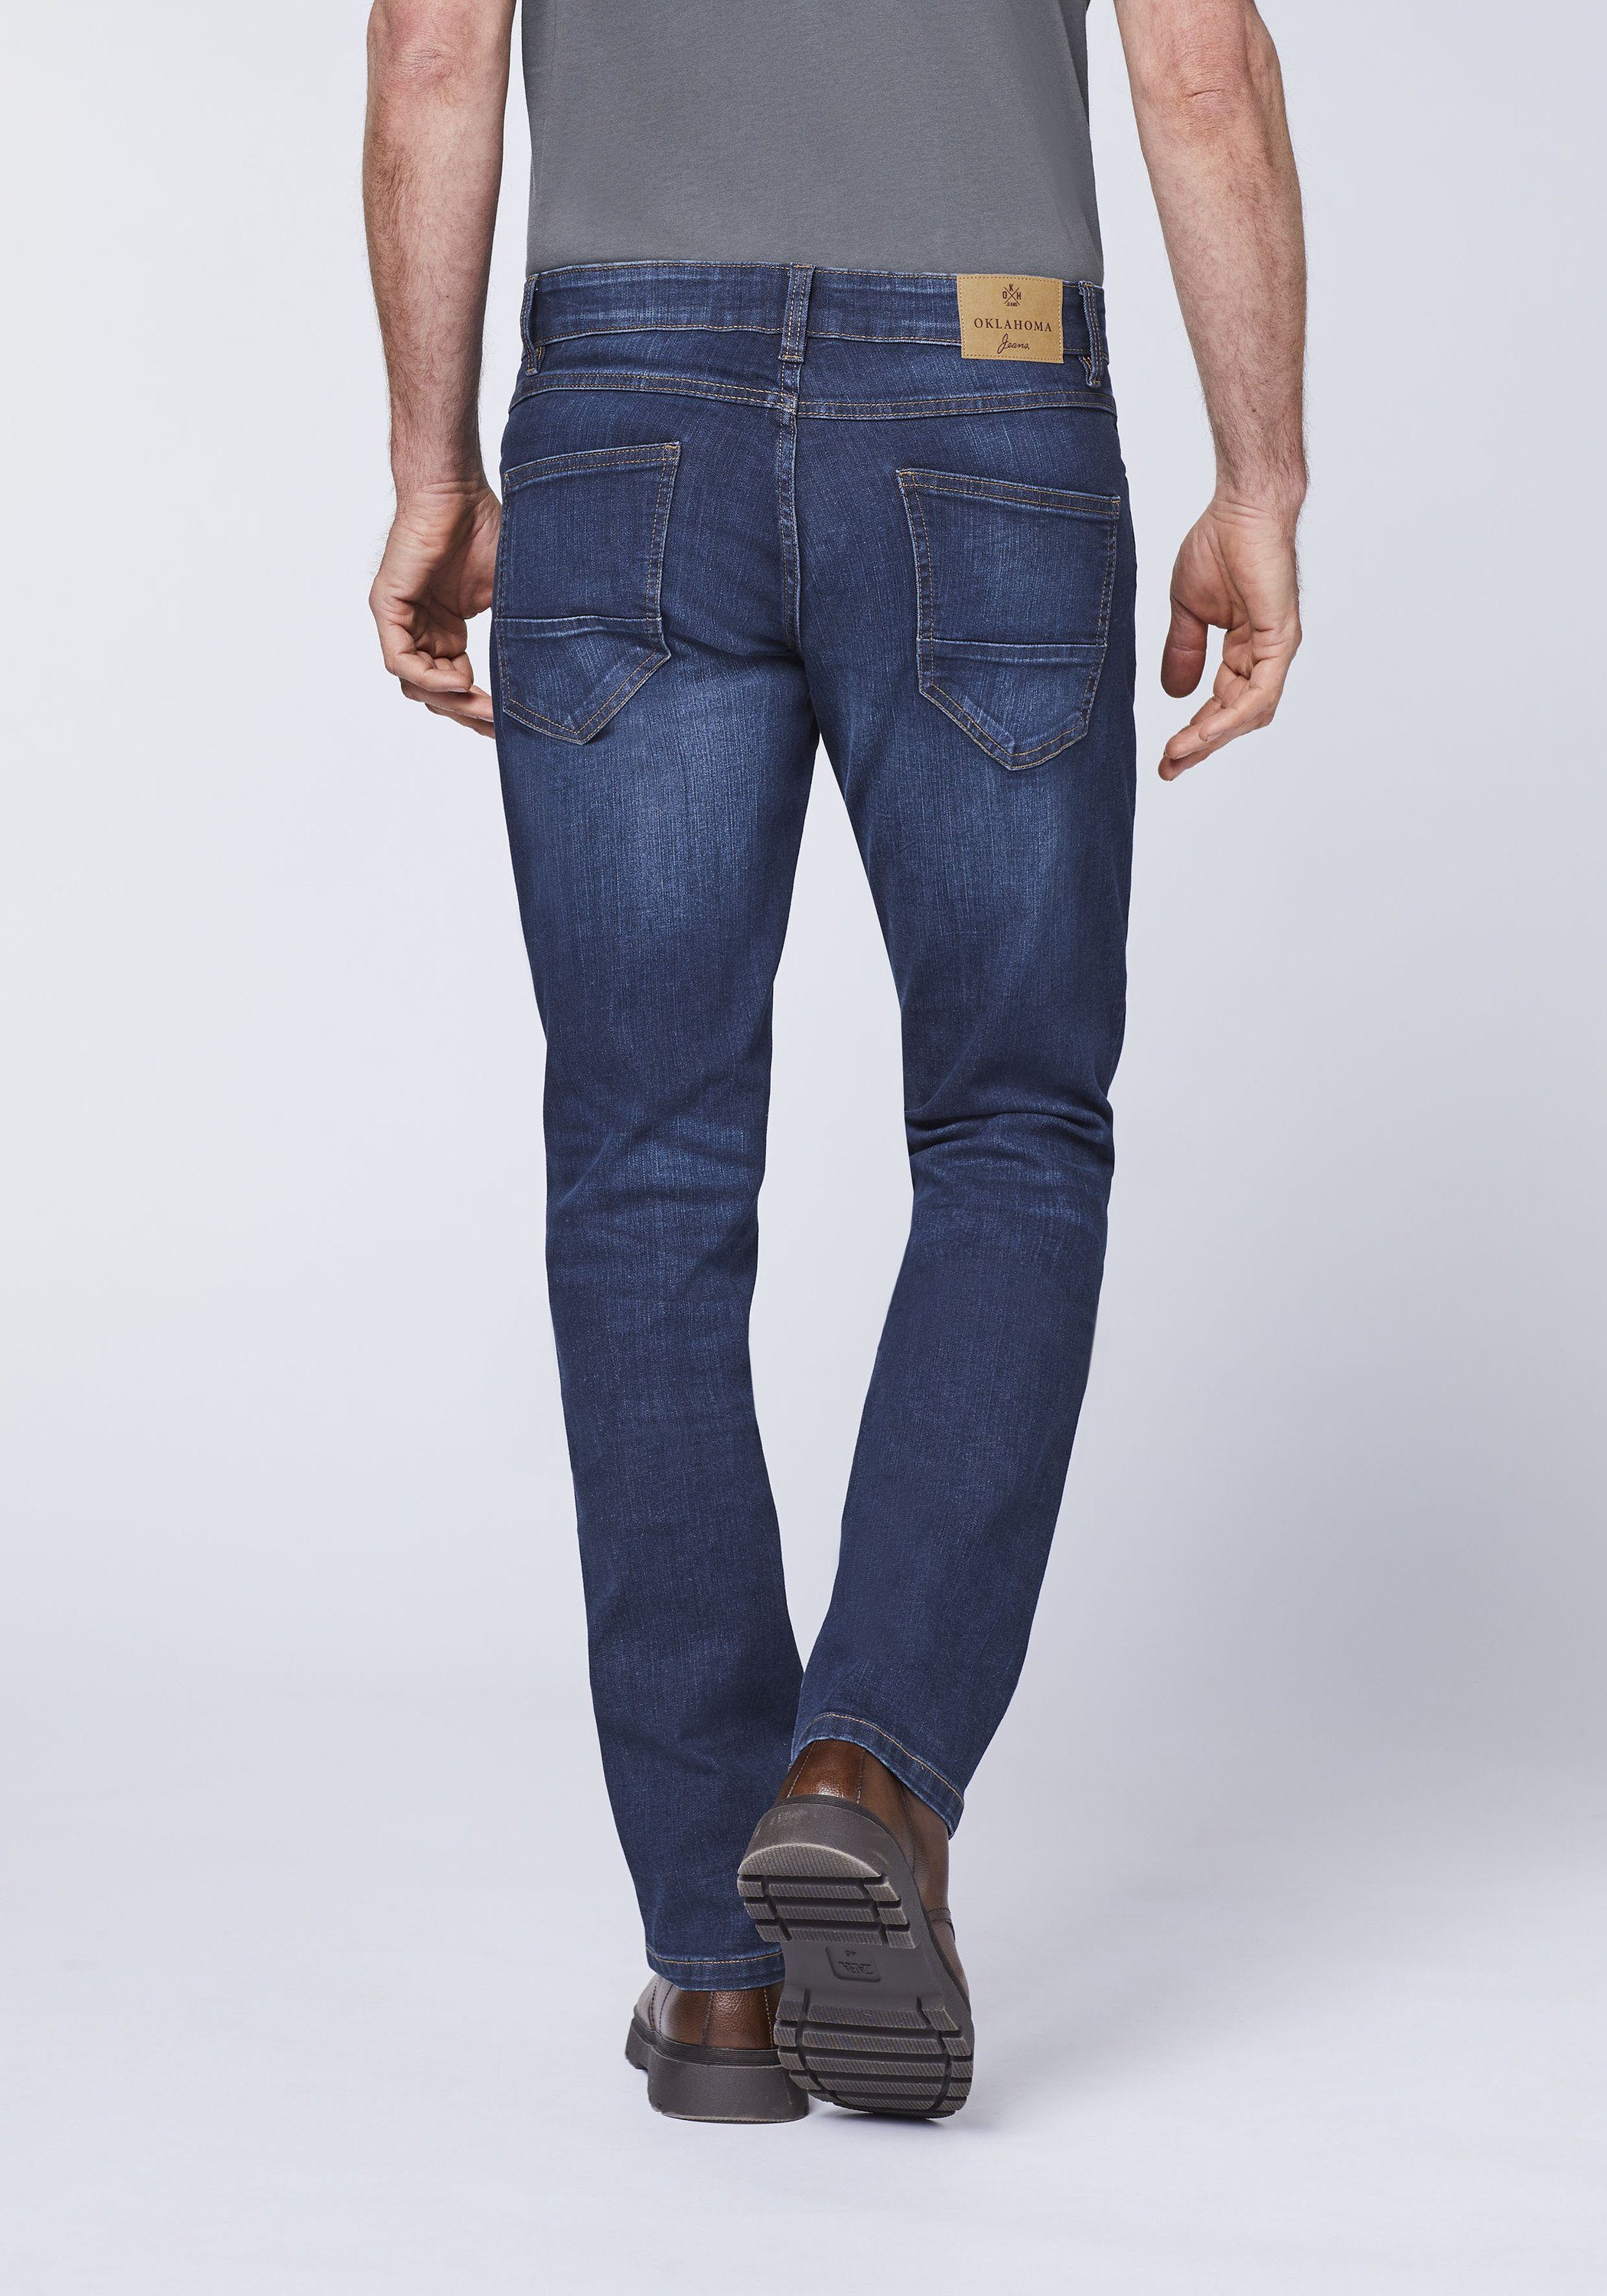 Oklahoma Jeans Slim-fit-Jeans weichem Denim aus